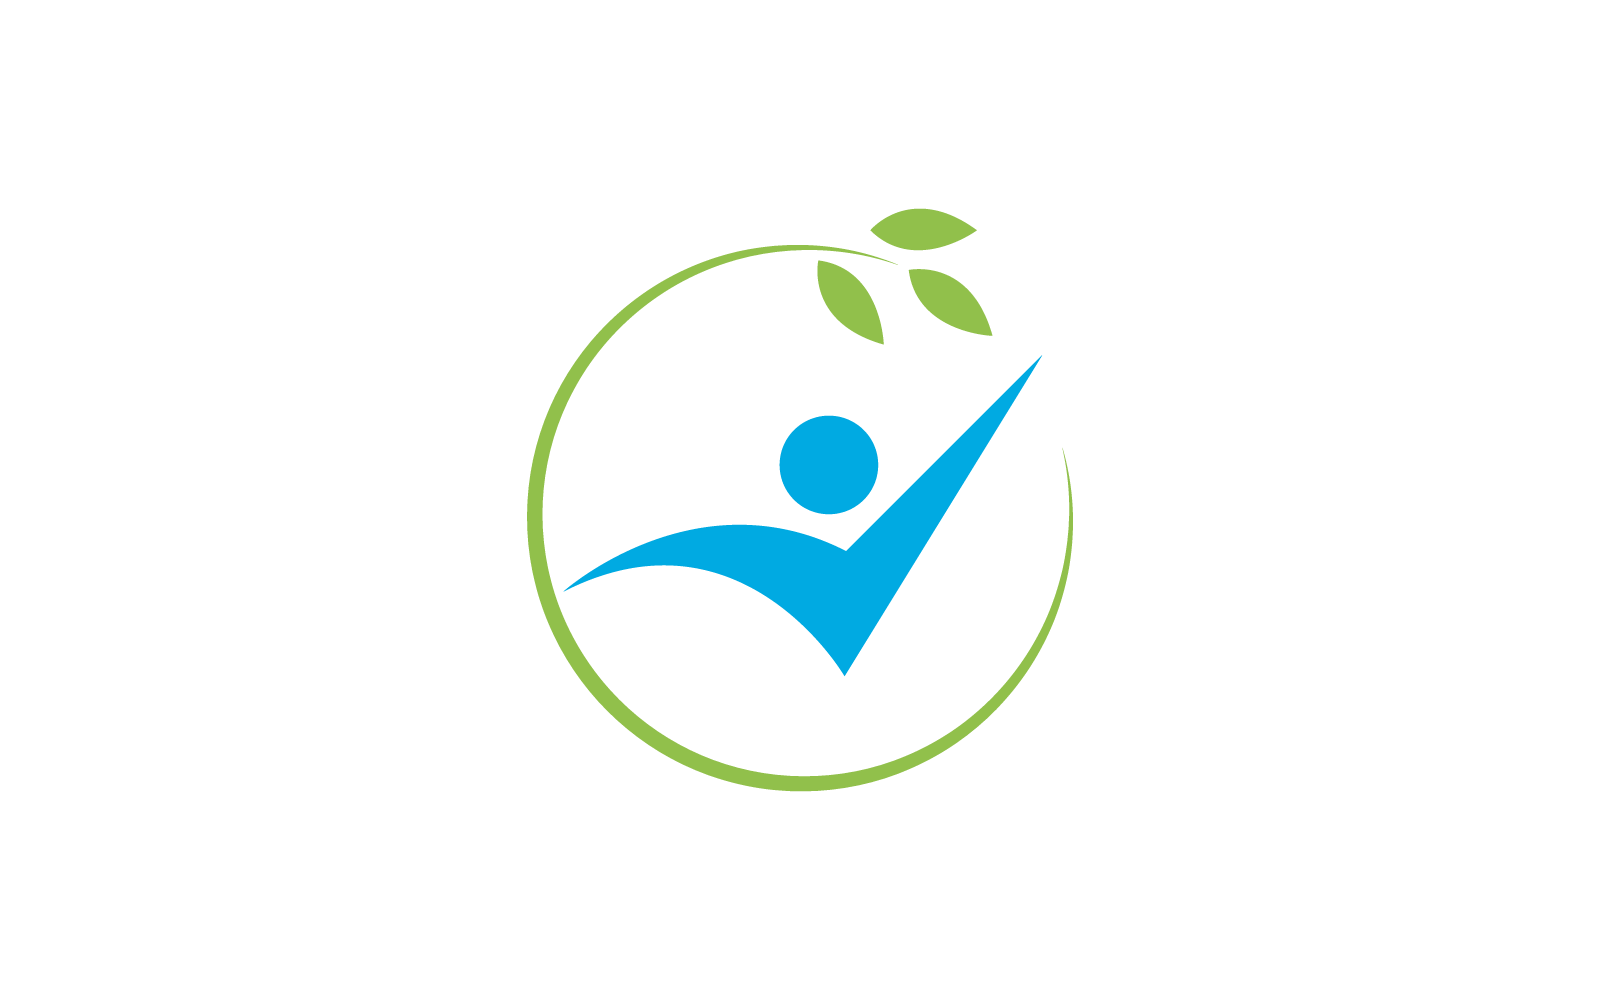 Healthy Life people logo design illustration